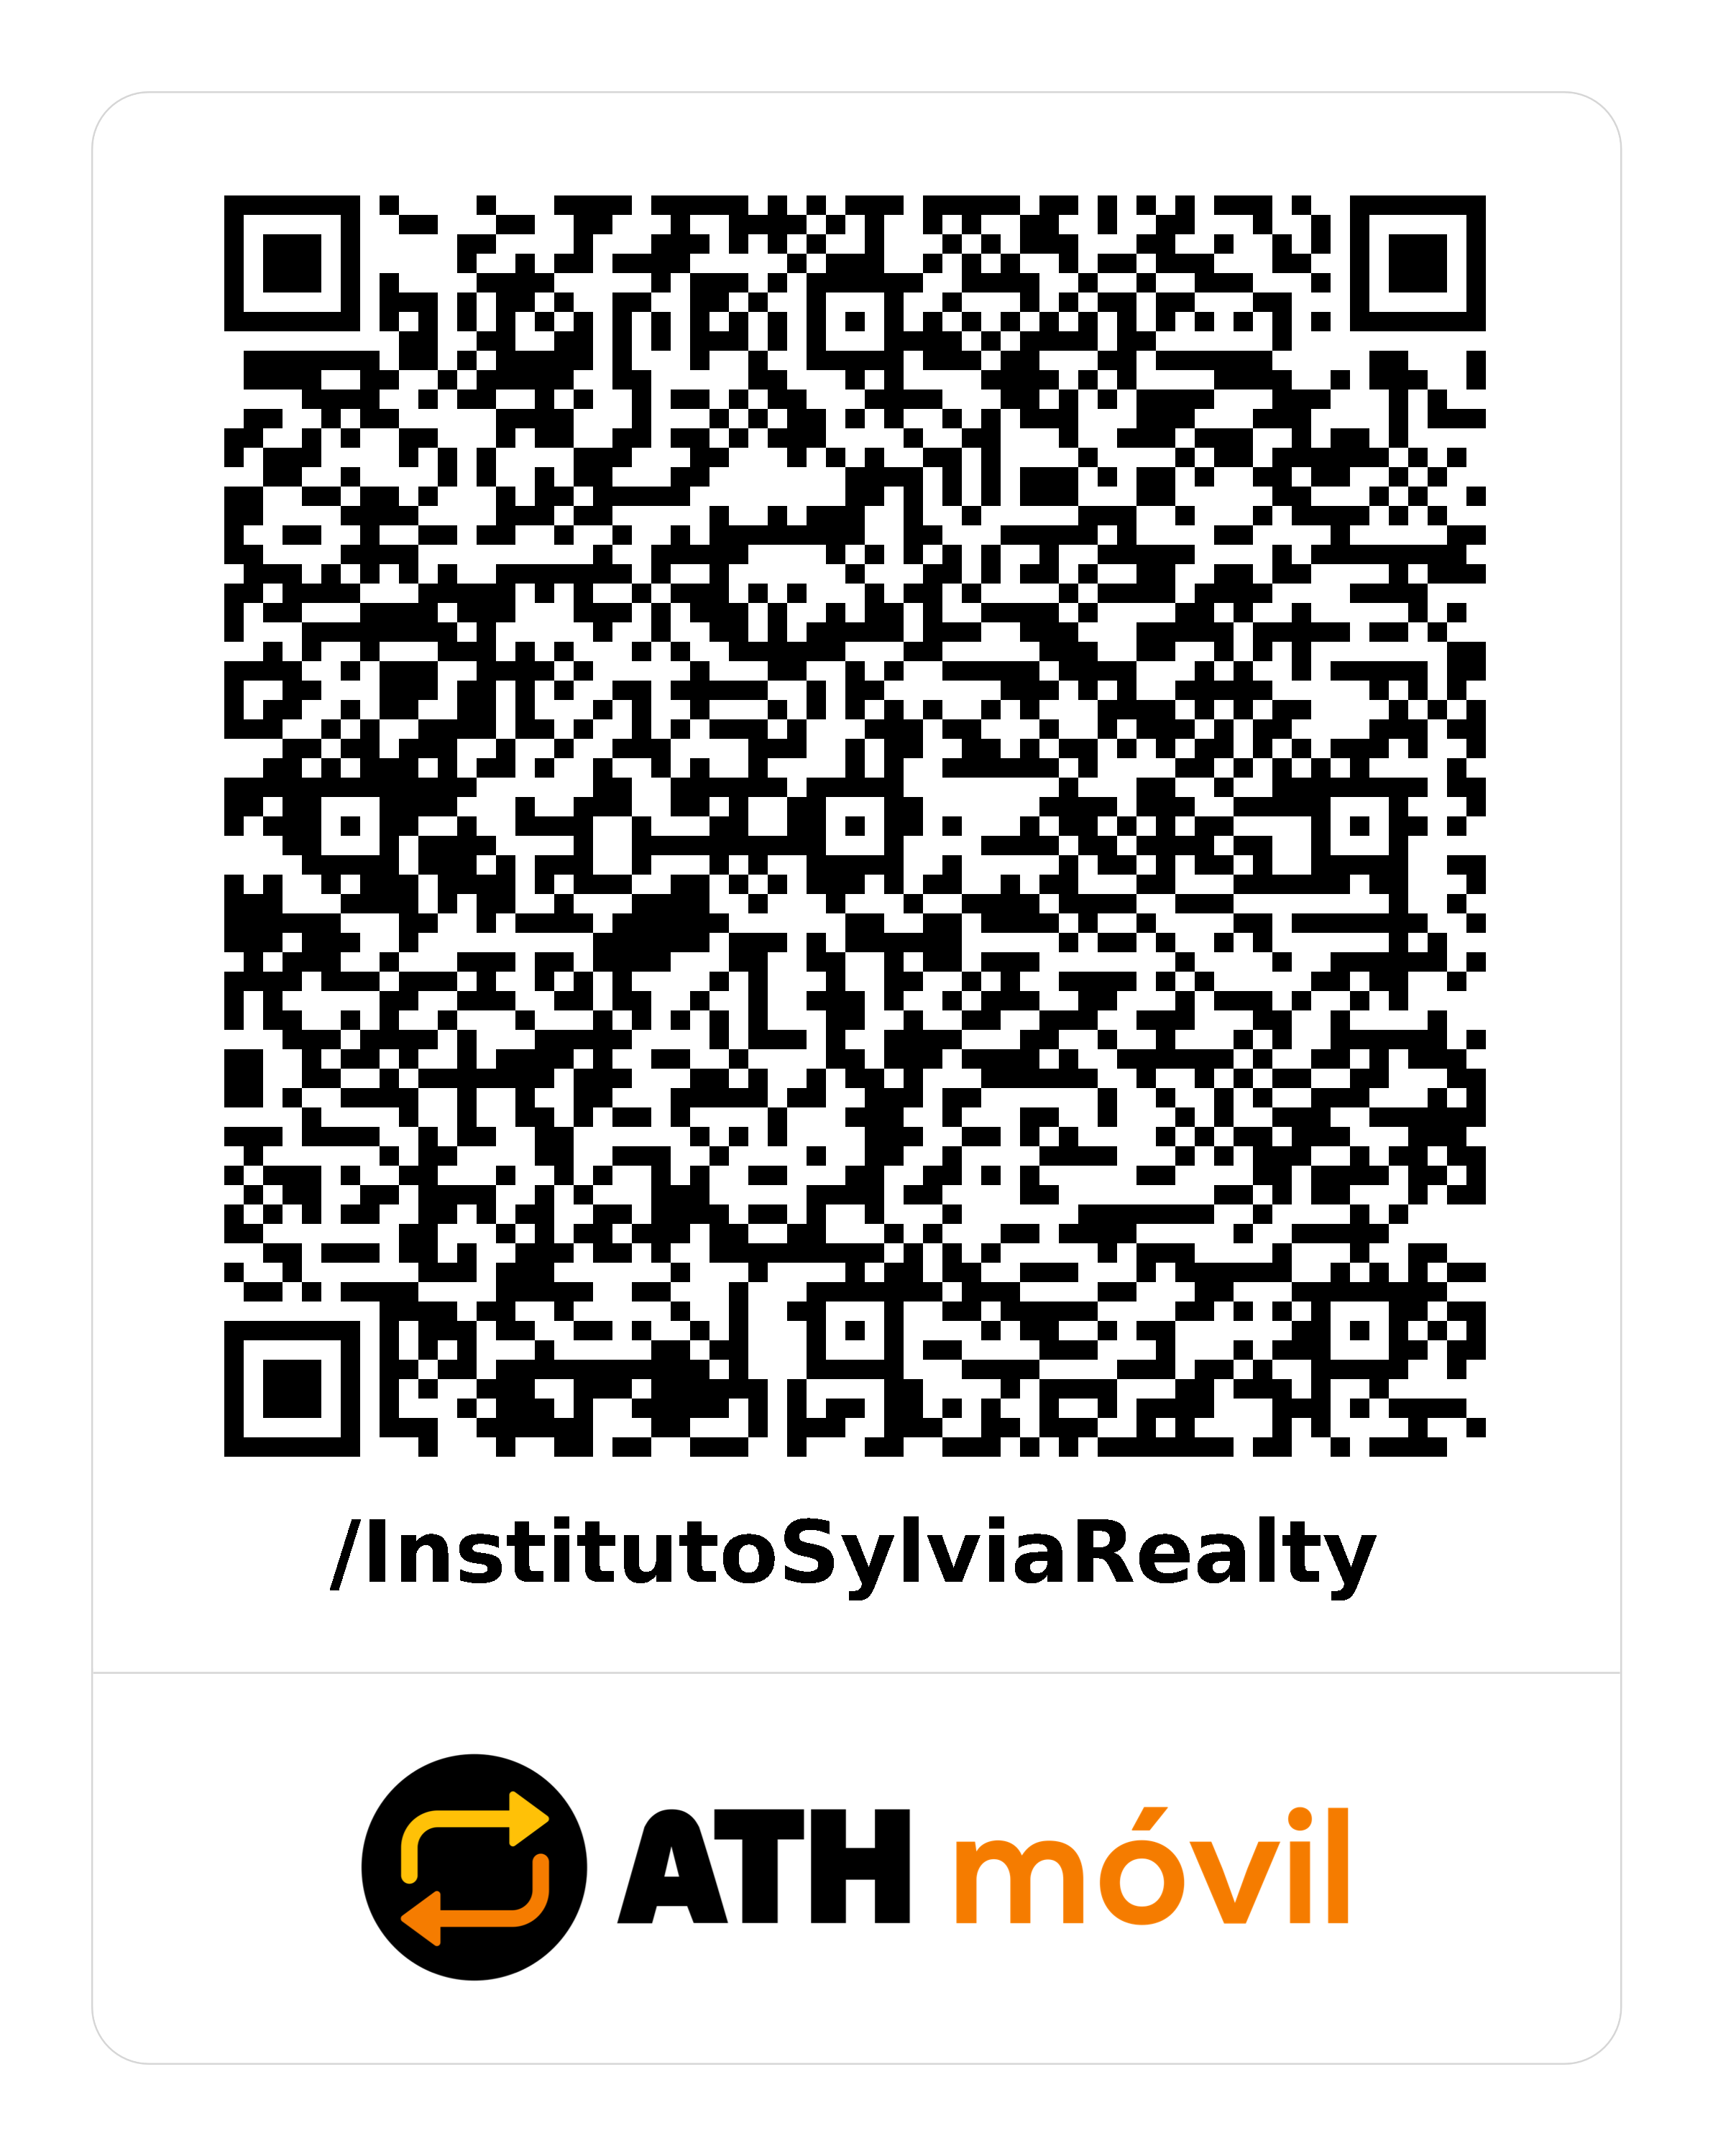 ath-movil-InstitutoSylviaRealty